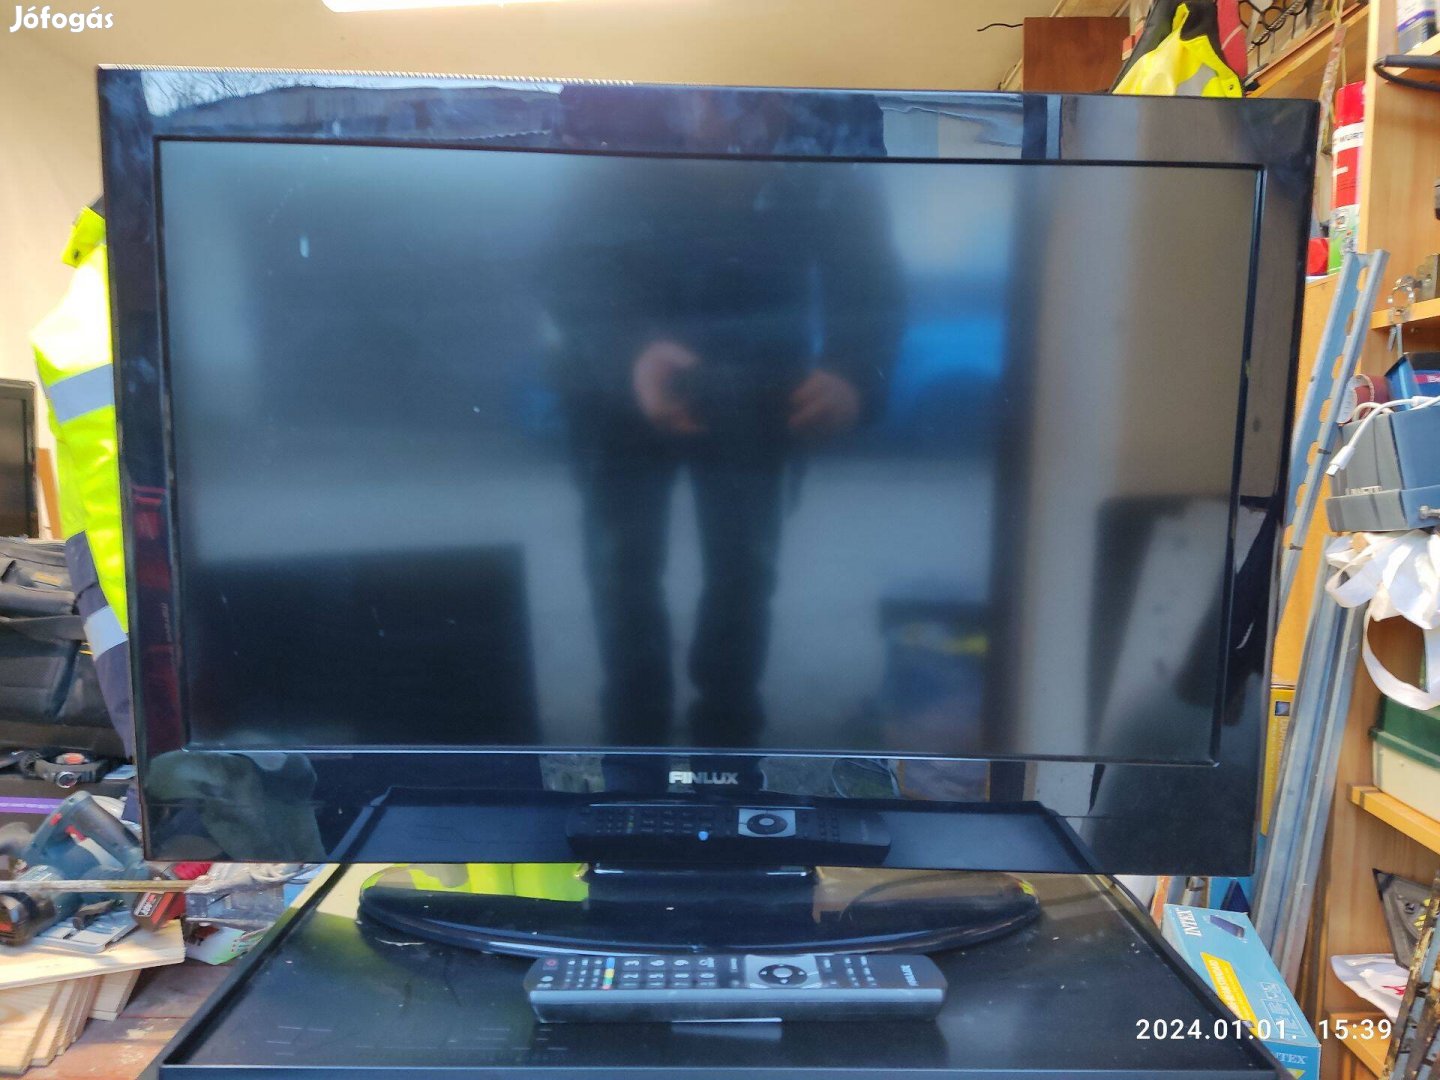 Finlux LCD tévé 32" (80cm) - olcsóbb lett!!!